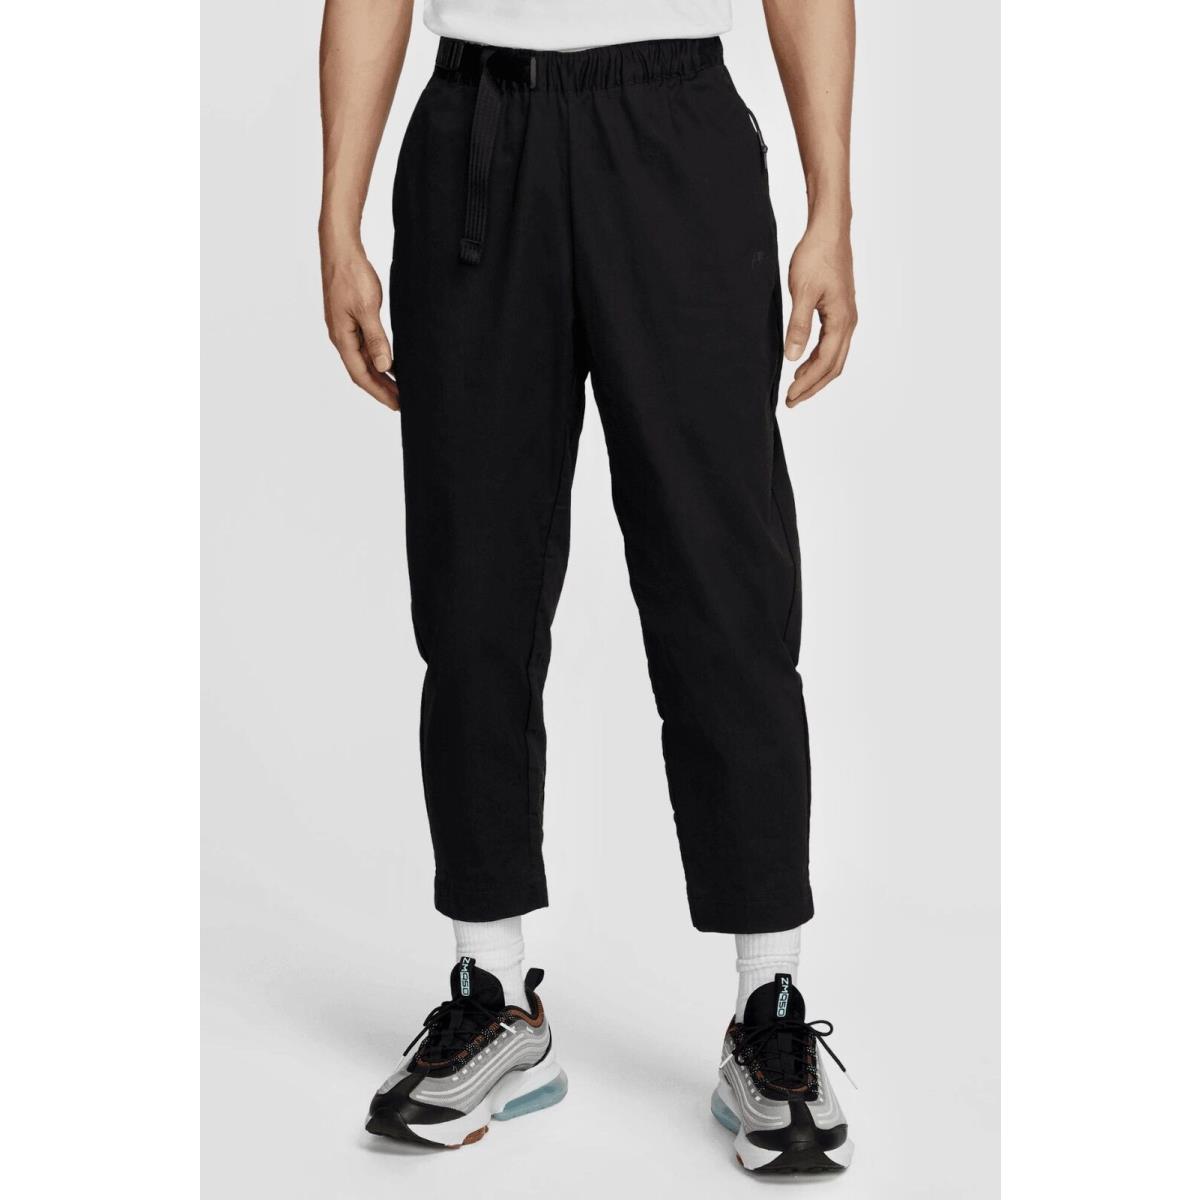 Nike Sportswear Tech Pack Woven Belted Black Ankle Length Pants Mens Sz L